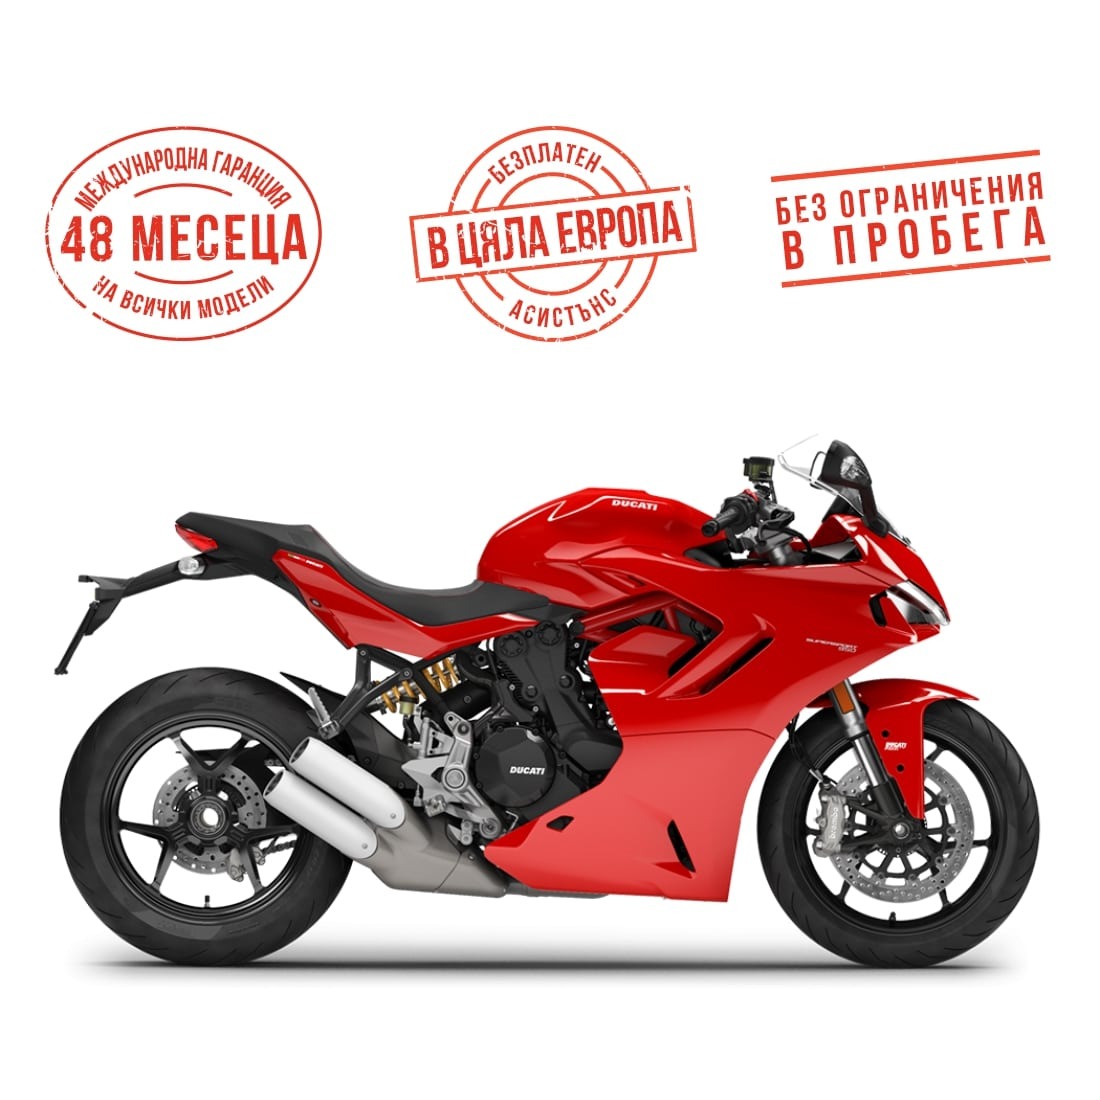 Ducati Supersport 950 DUCATI RED - изображение 1